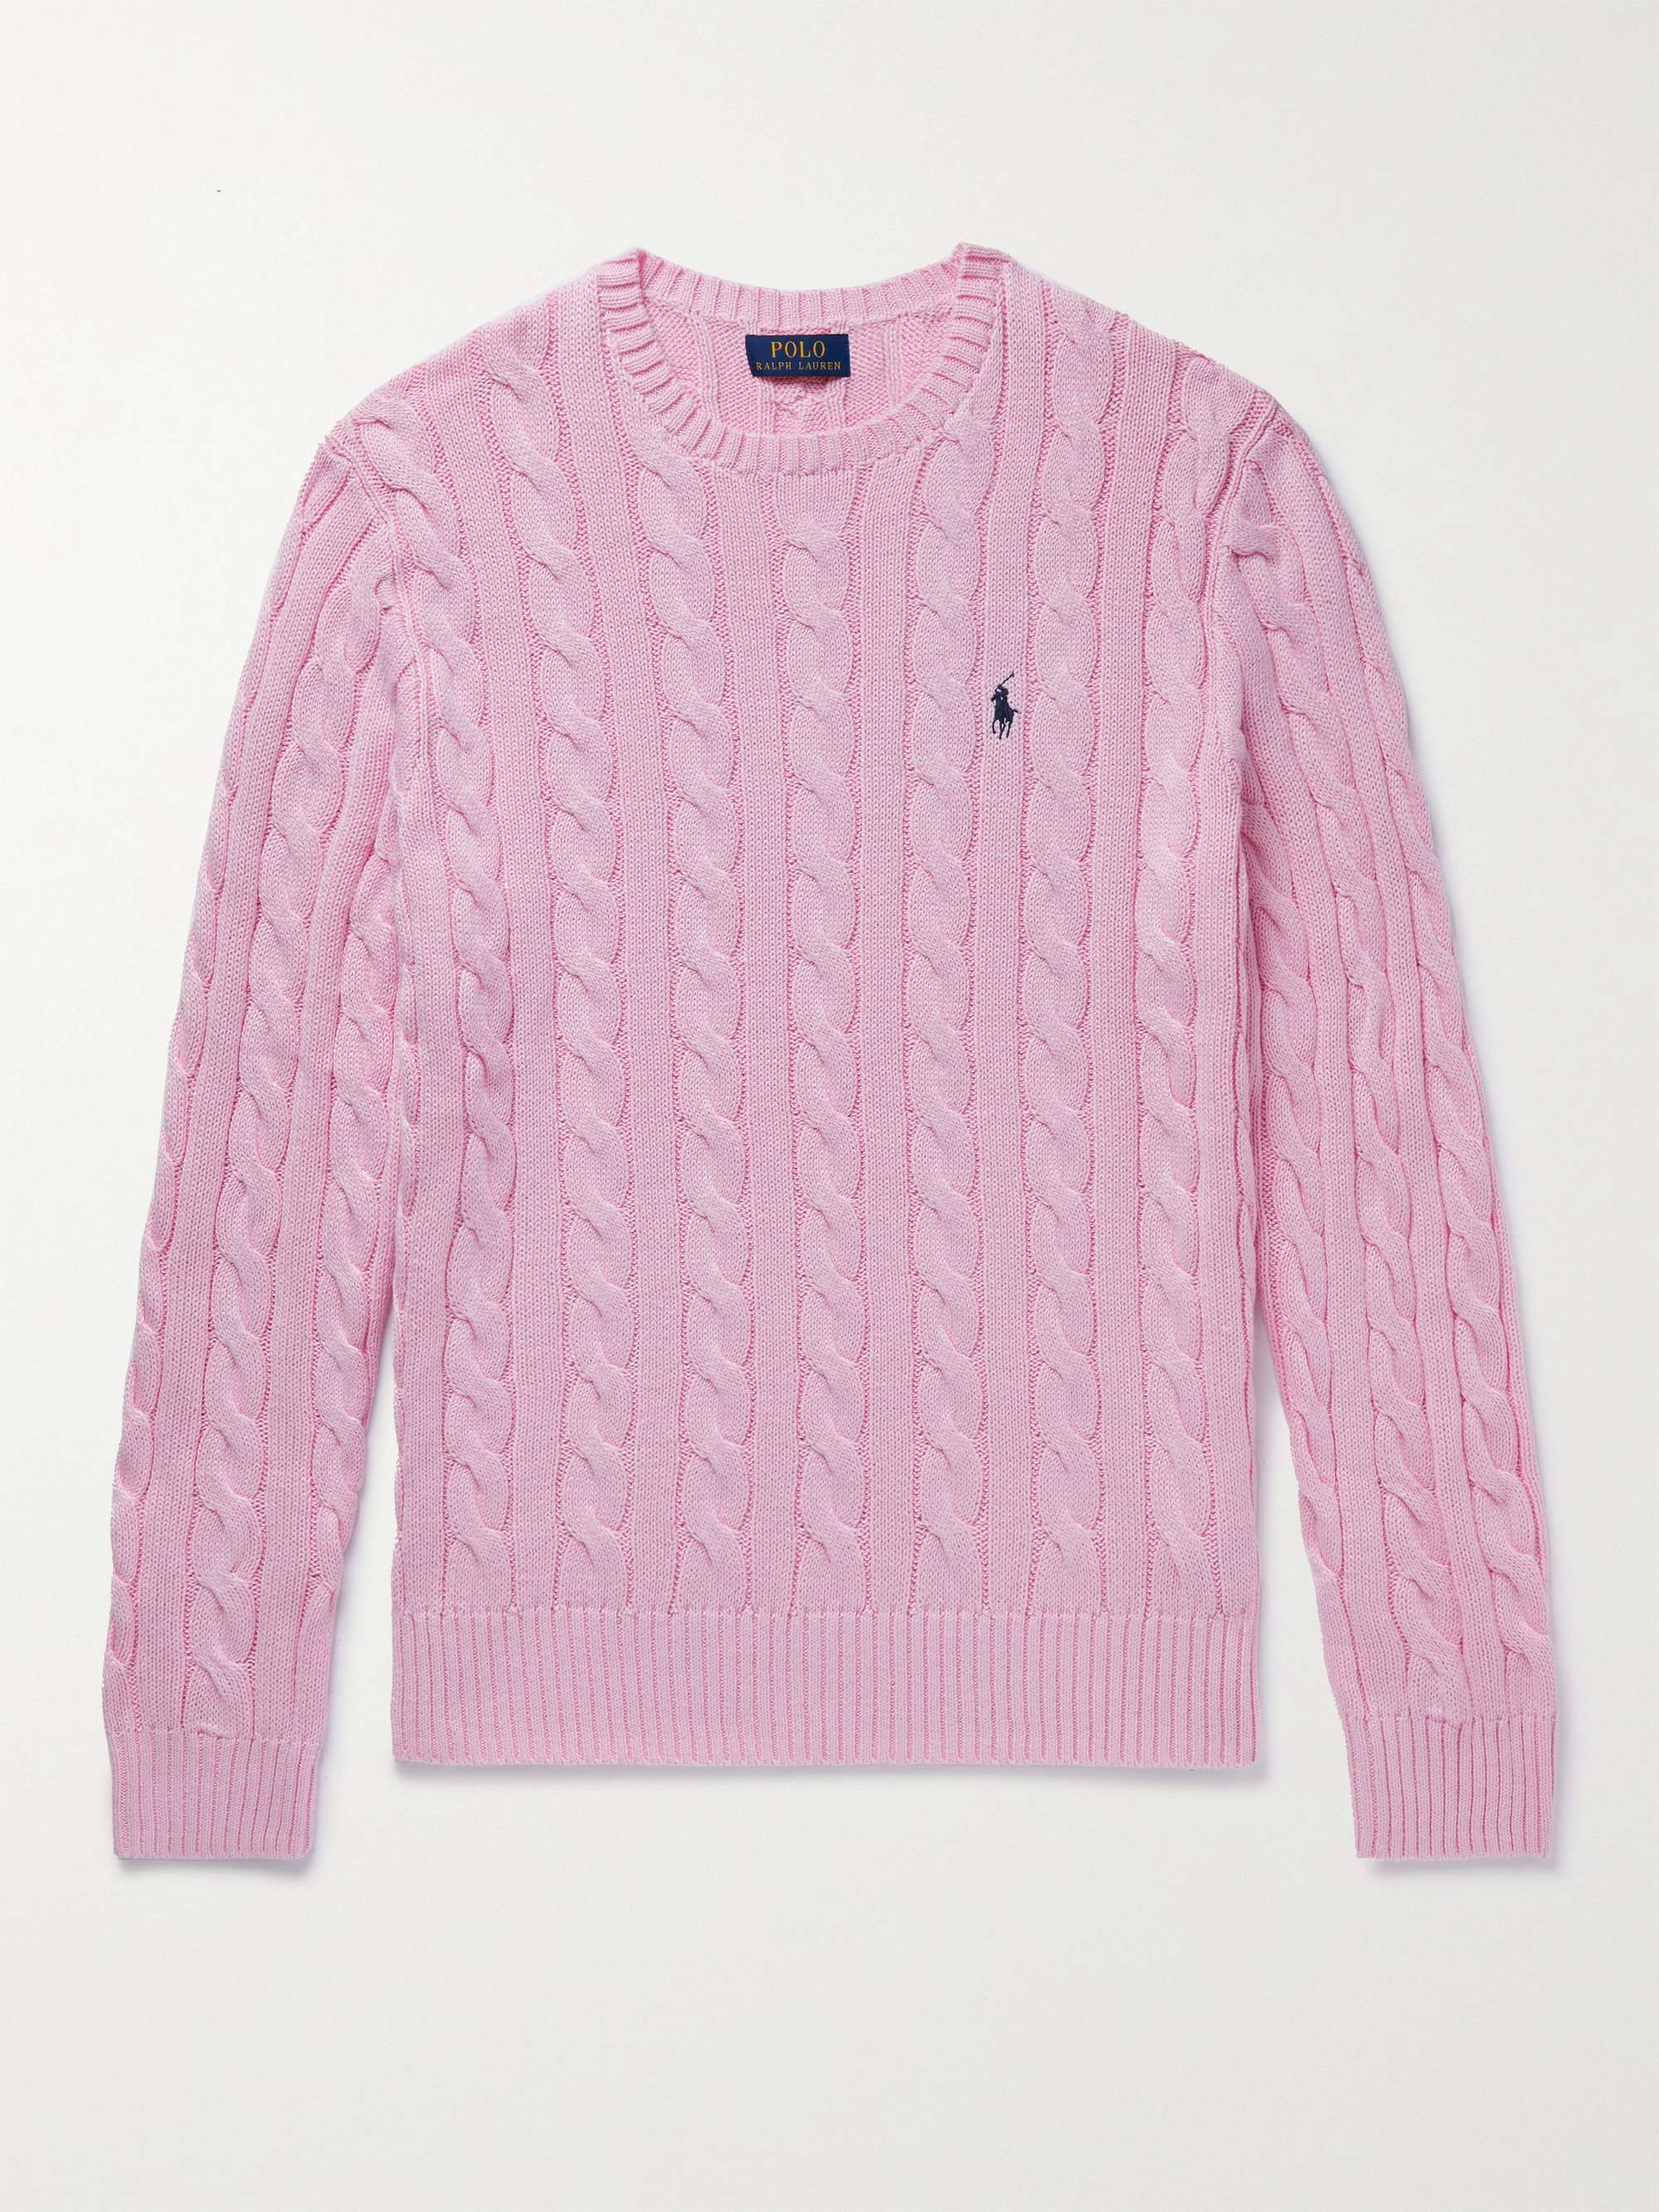 POLO RALPH LAUREN Cable-Knit Cotton Sweater